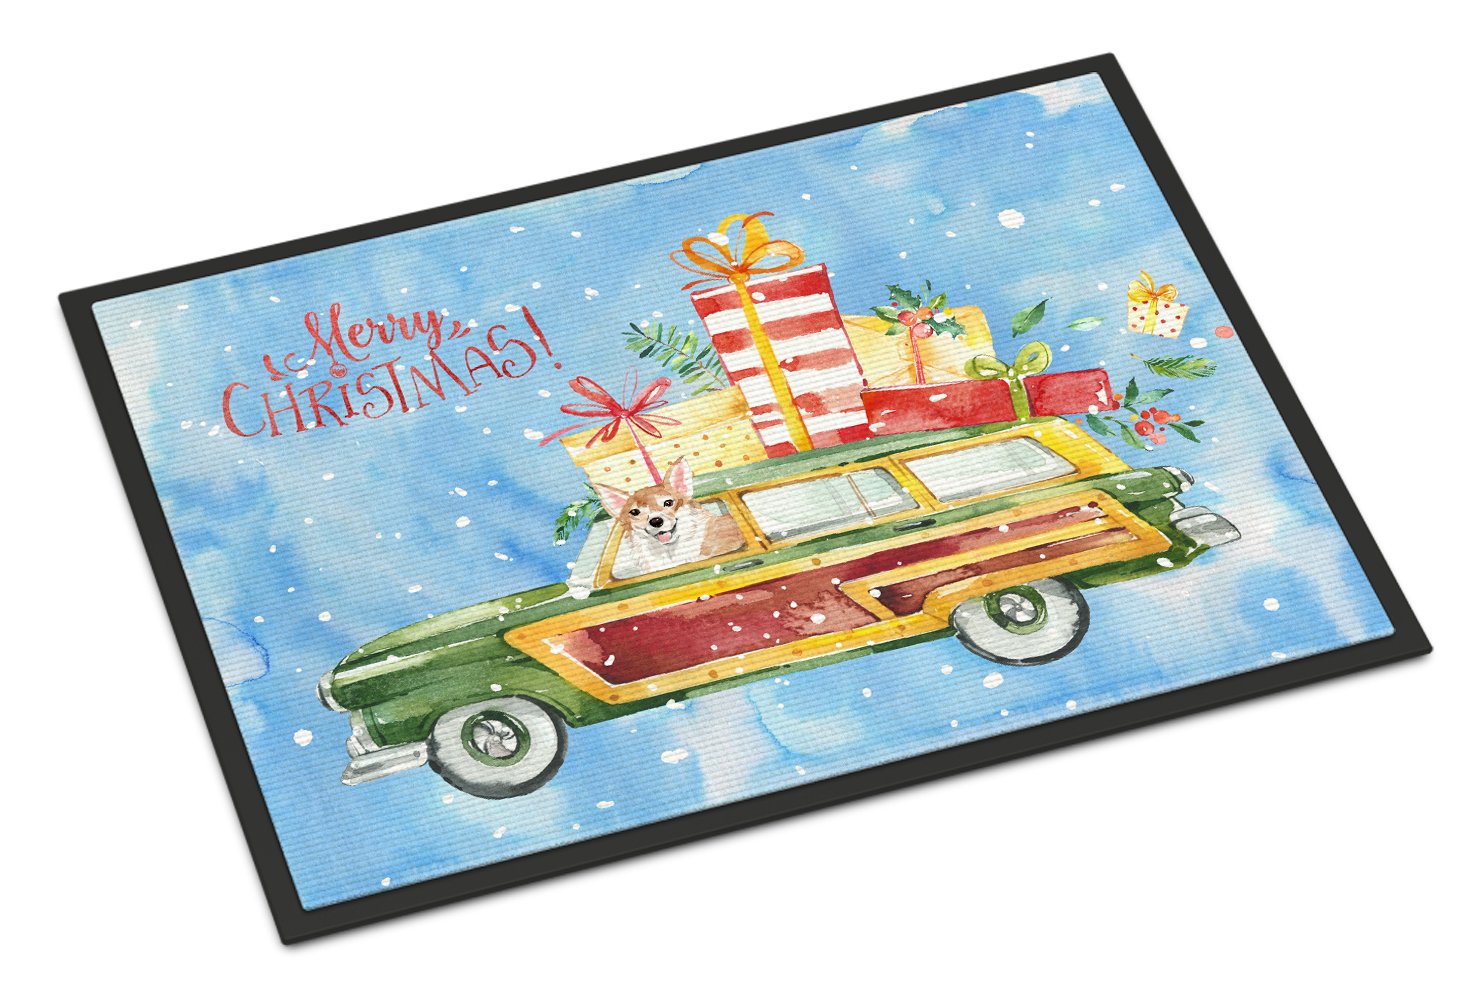 Merry Christmas Corgi Indoor or Outdoor Mat 24x36 CK2451JMAT by Caroline's Treasures